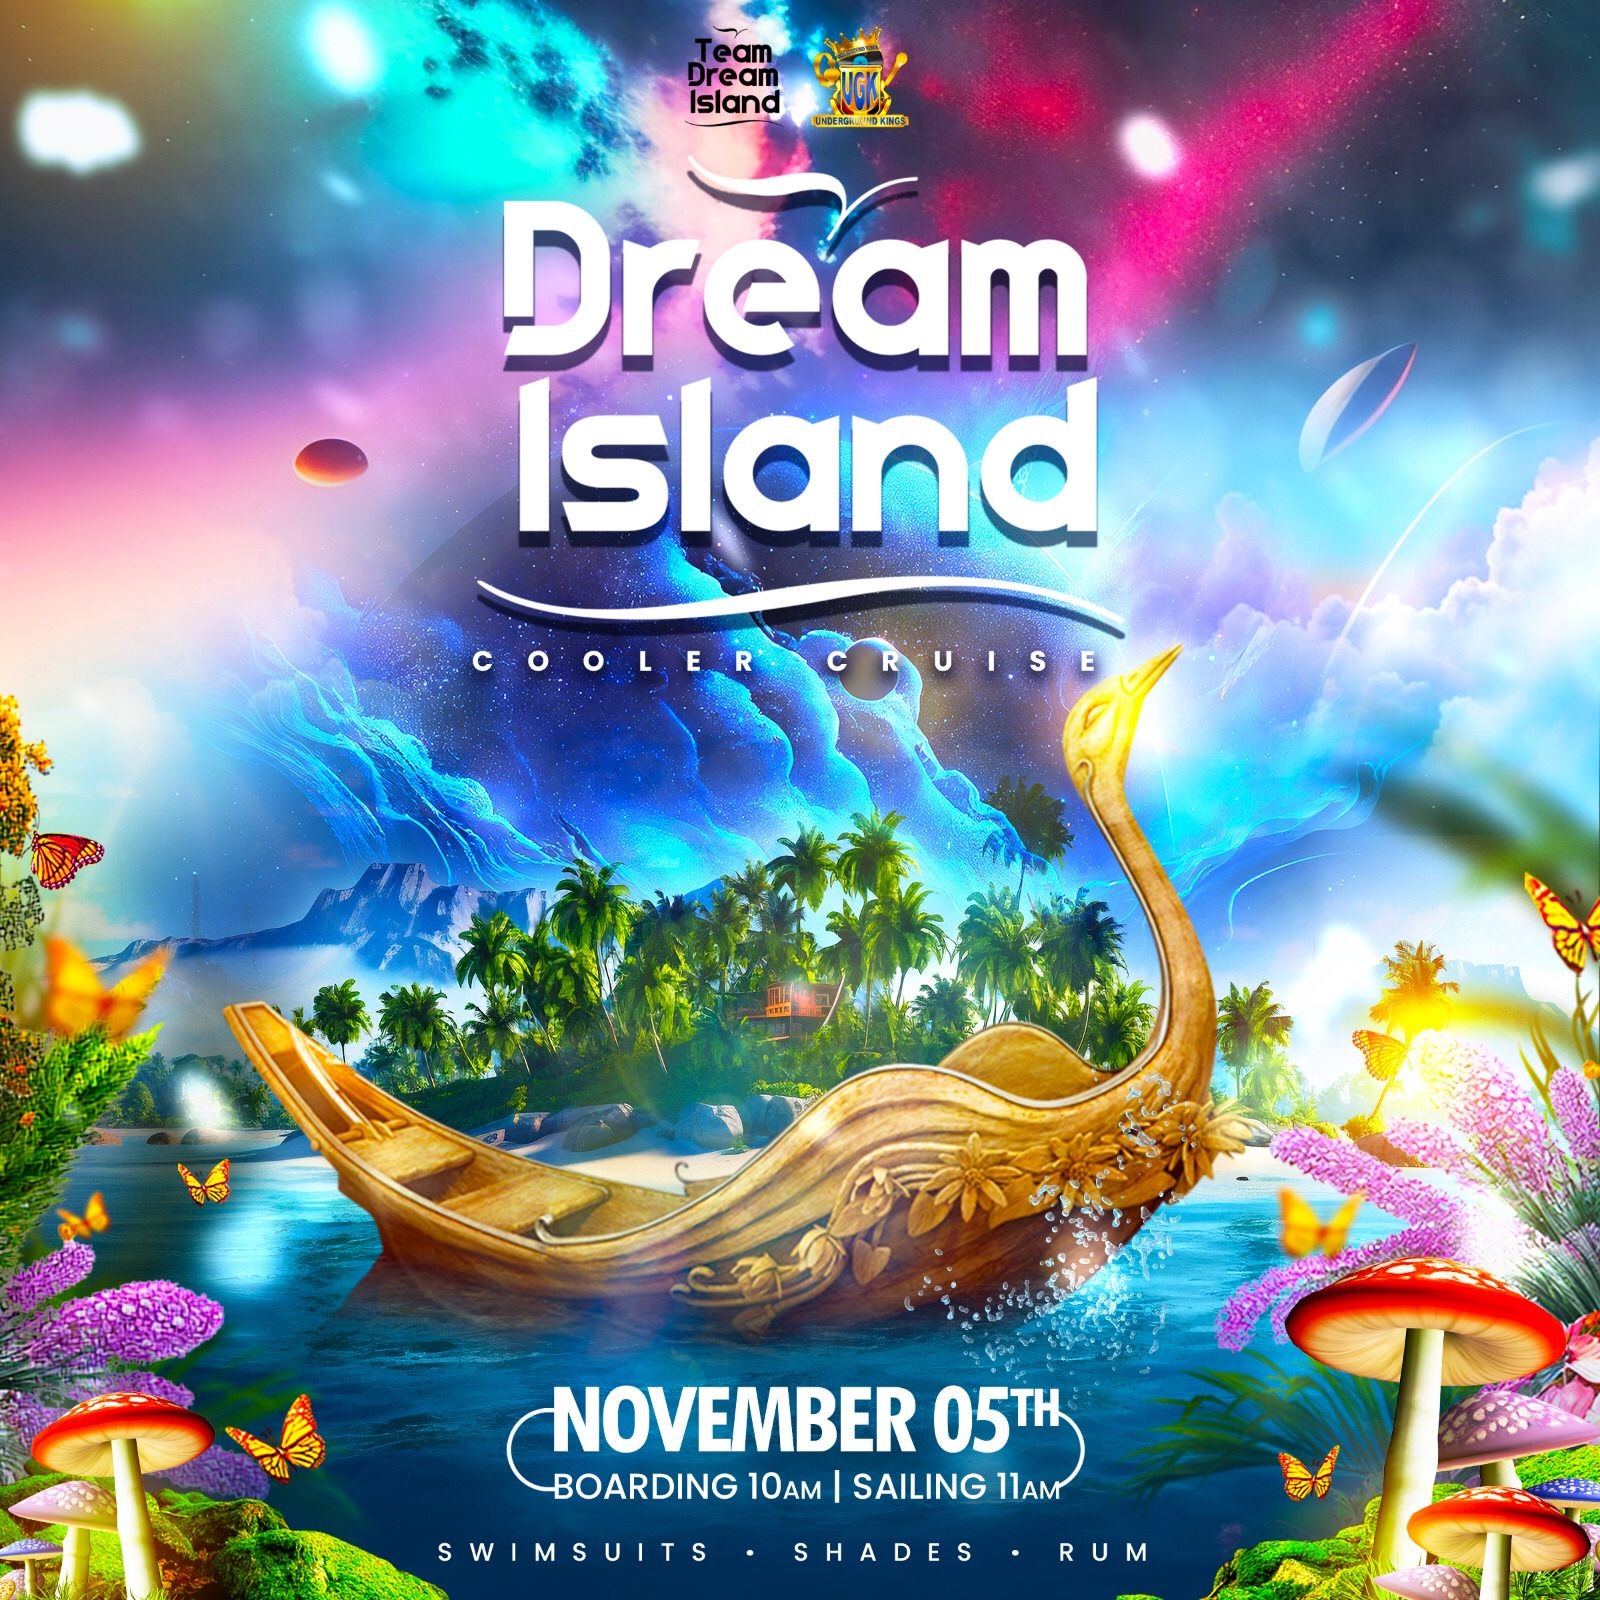 Dream Island Cooler Cruise